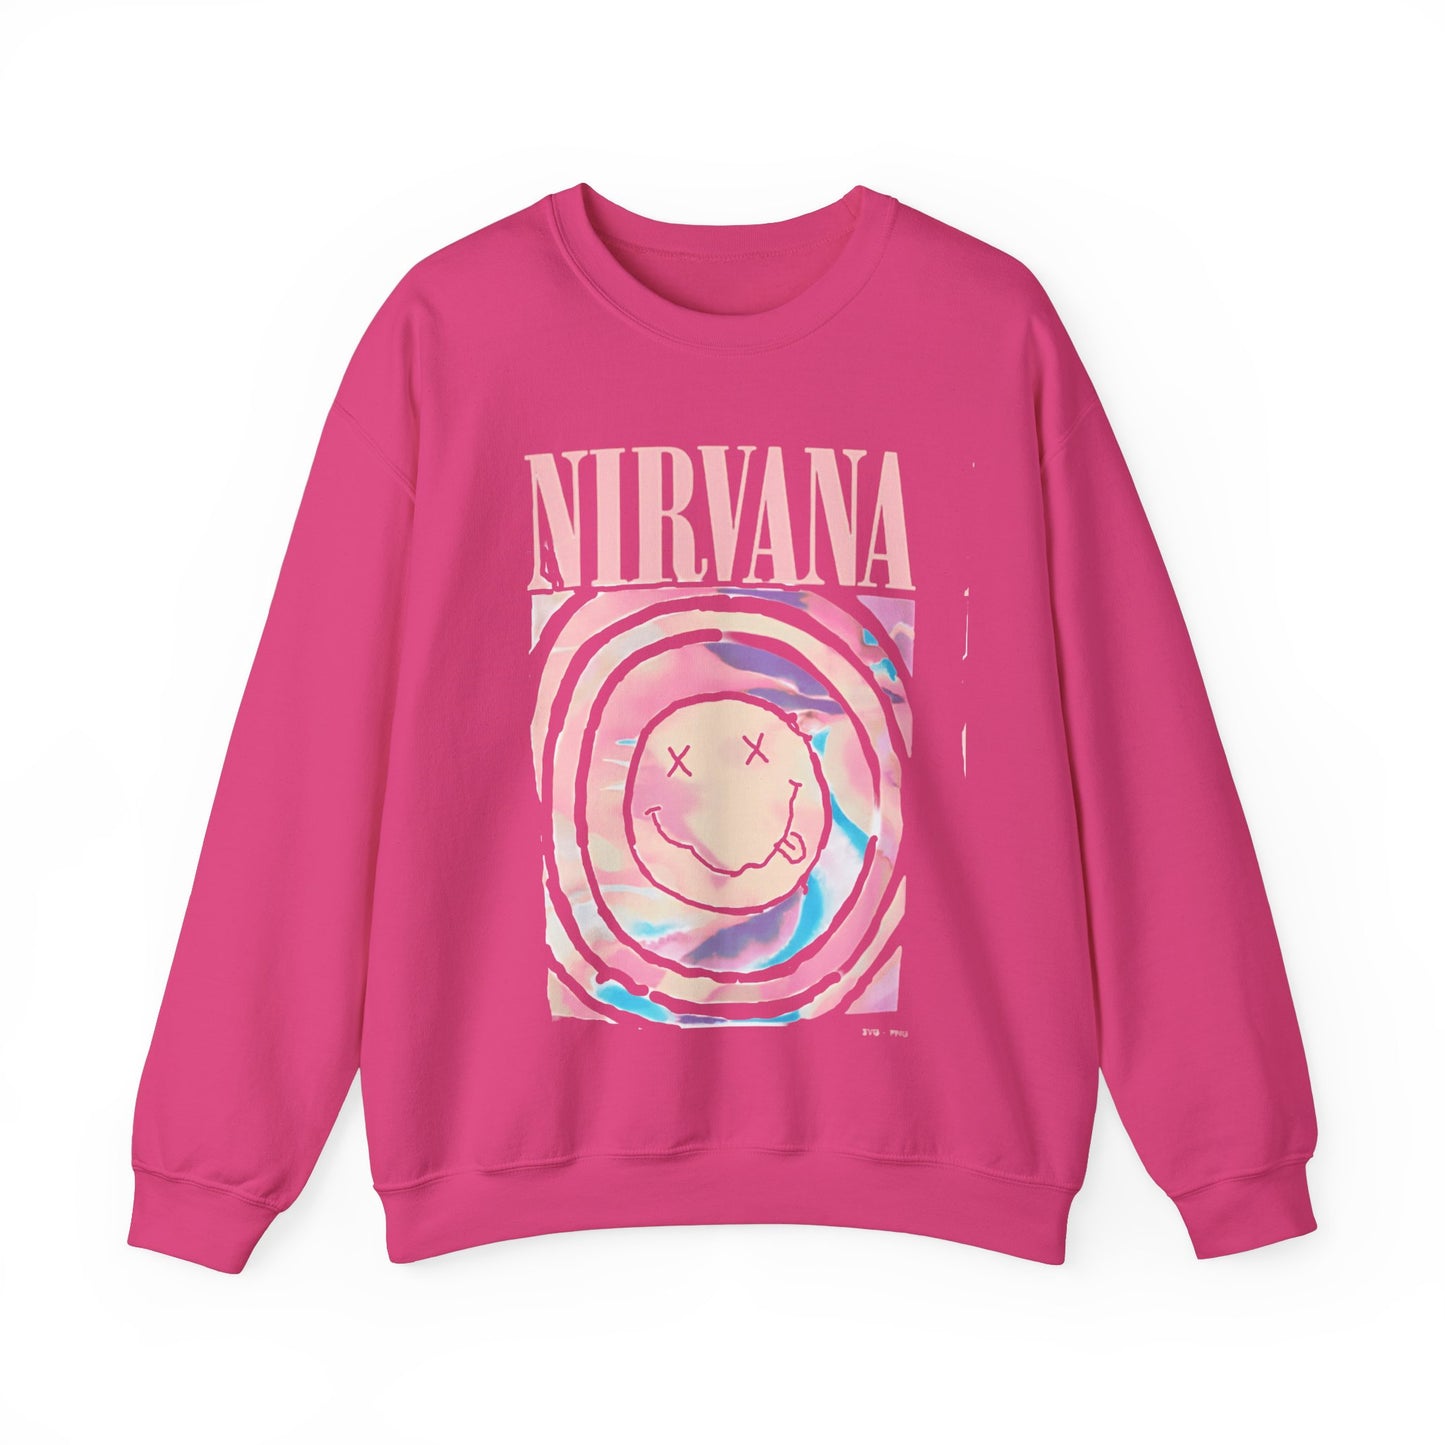 Nirvana-Inspired Unisex Heavy Blend Crewneck Sweatshirt: Comfort, Style, and Ethical Craftsmanship